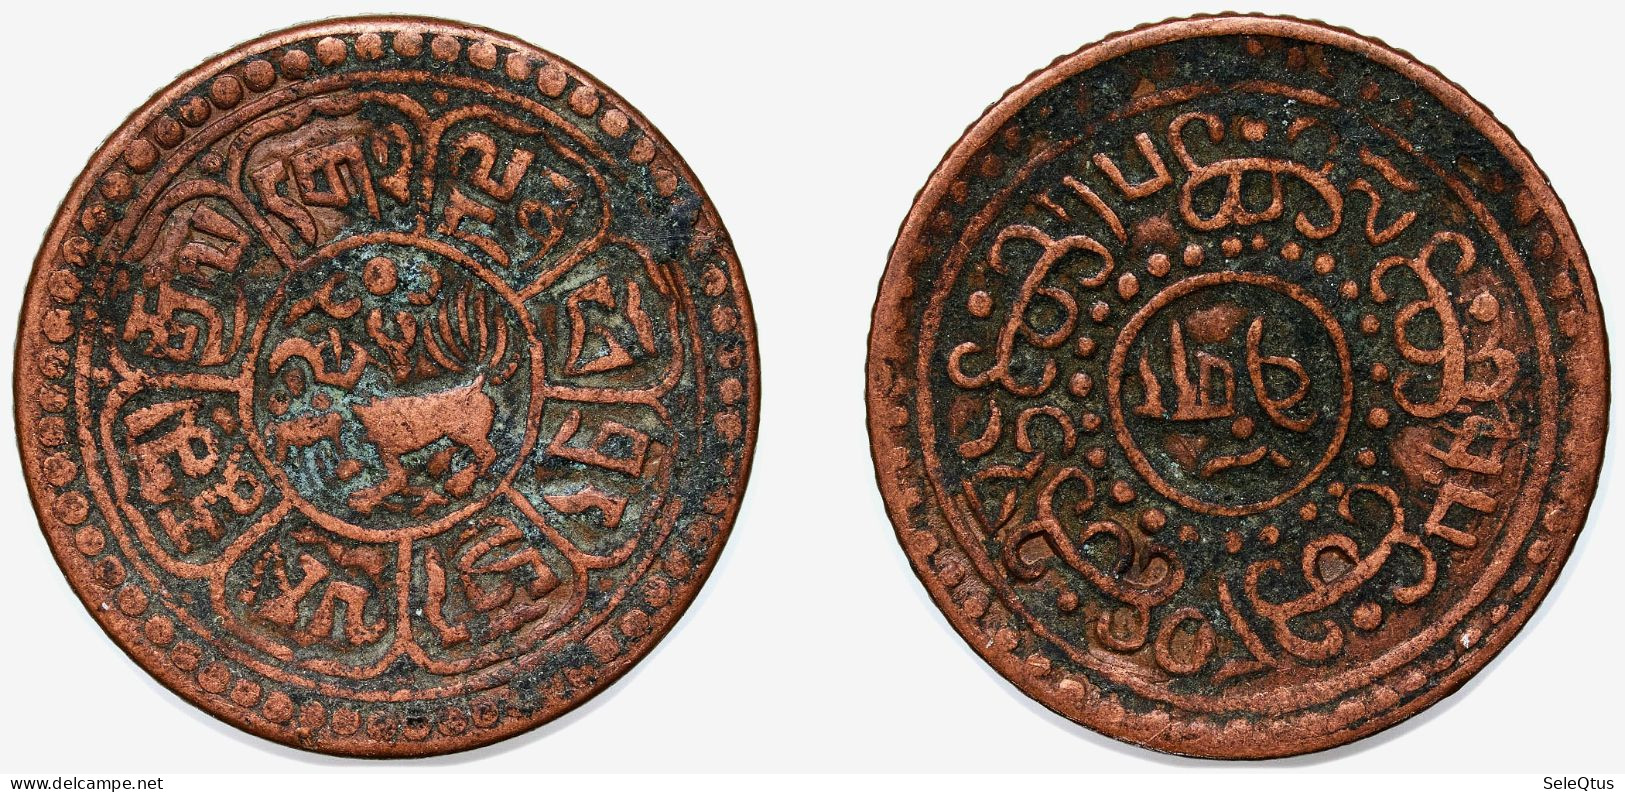 Monedas Antiguas - Ancient Coins (00089-003-0168) - Other - Asia